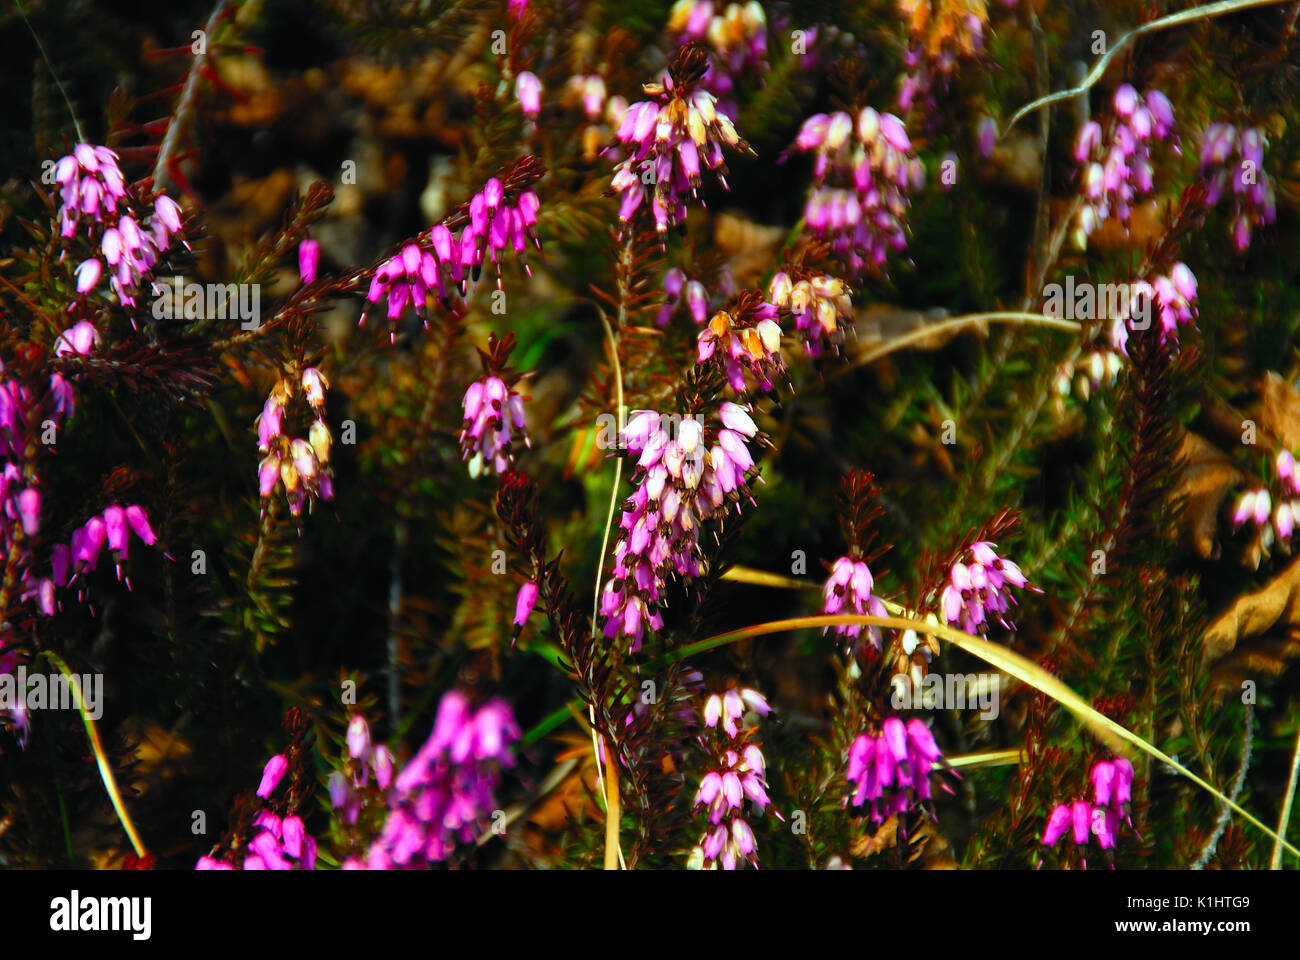 A erica bush flowering Stock Photo